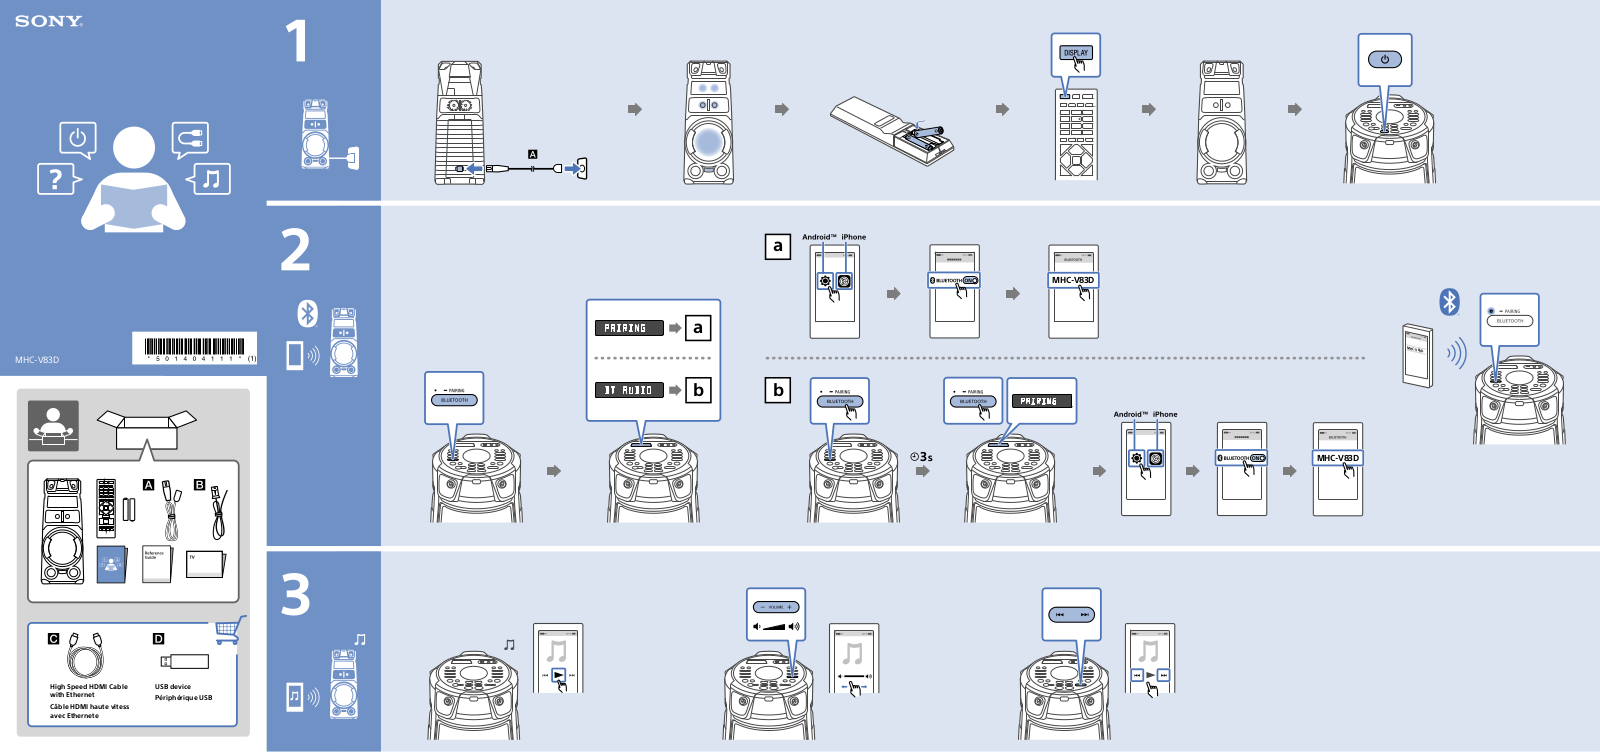 Sony MHC-V83D User Manual